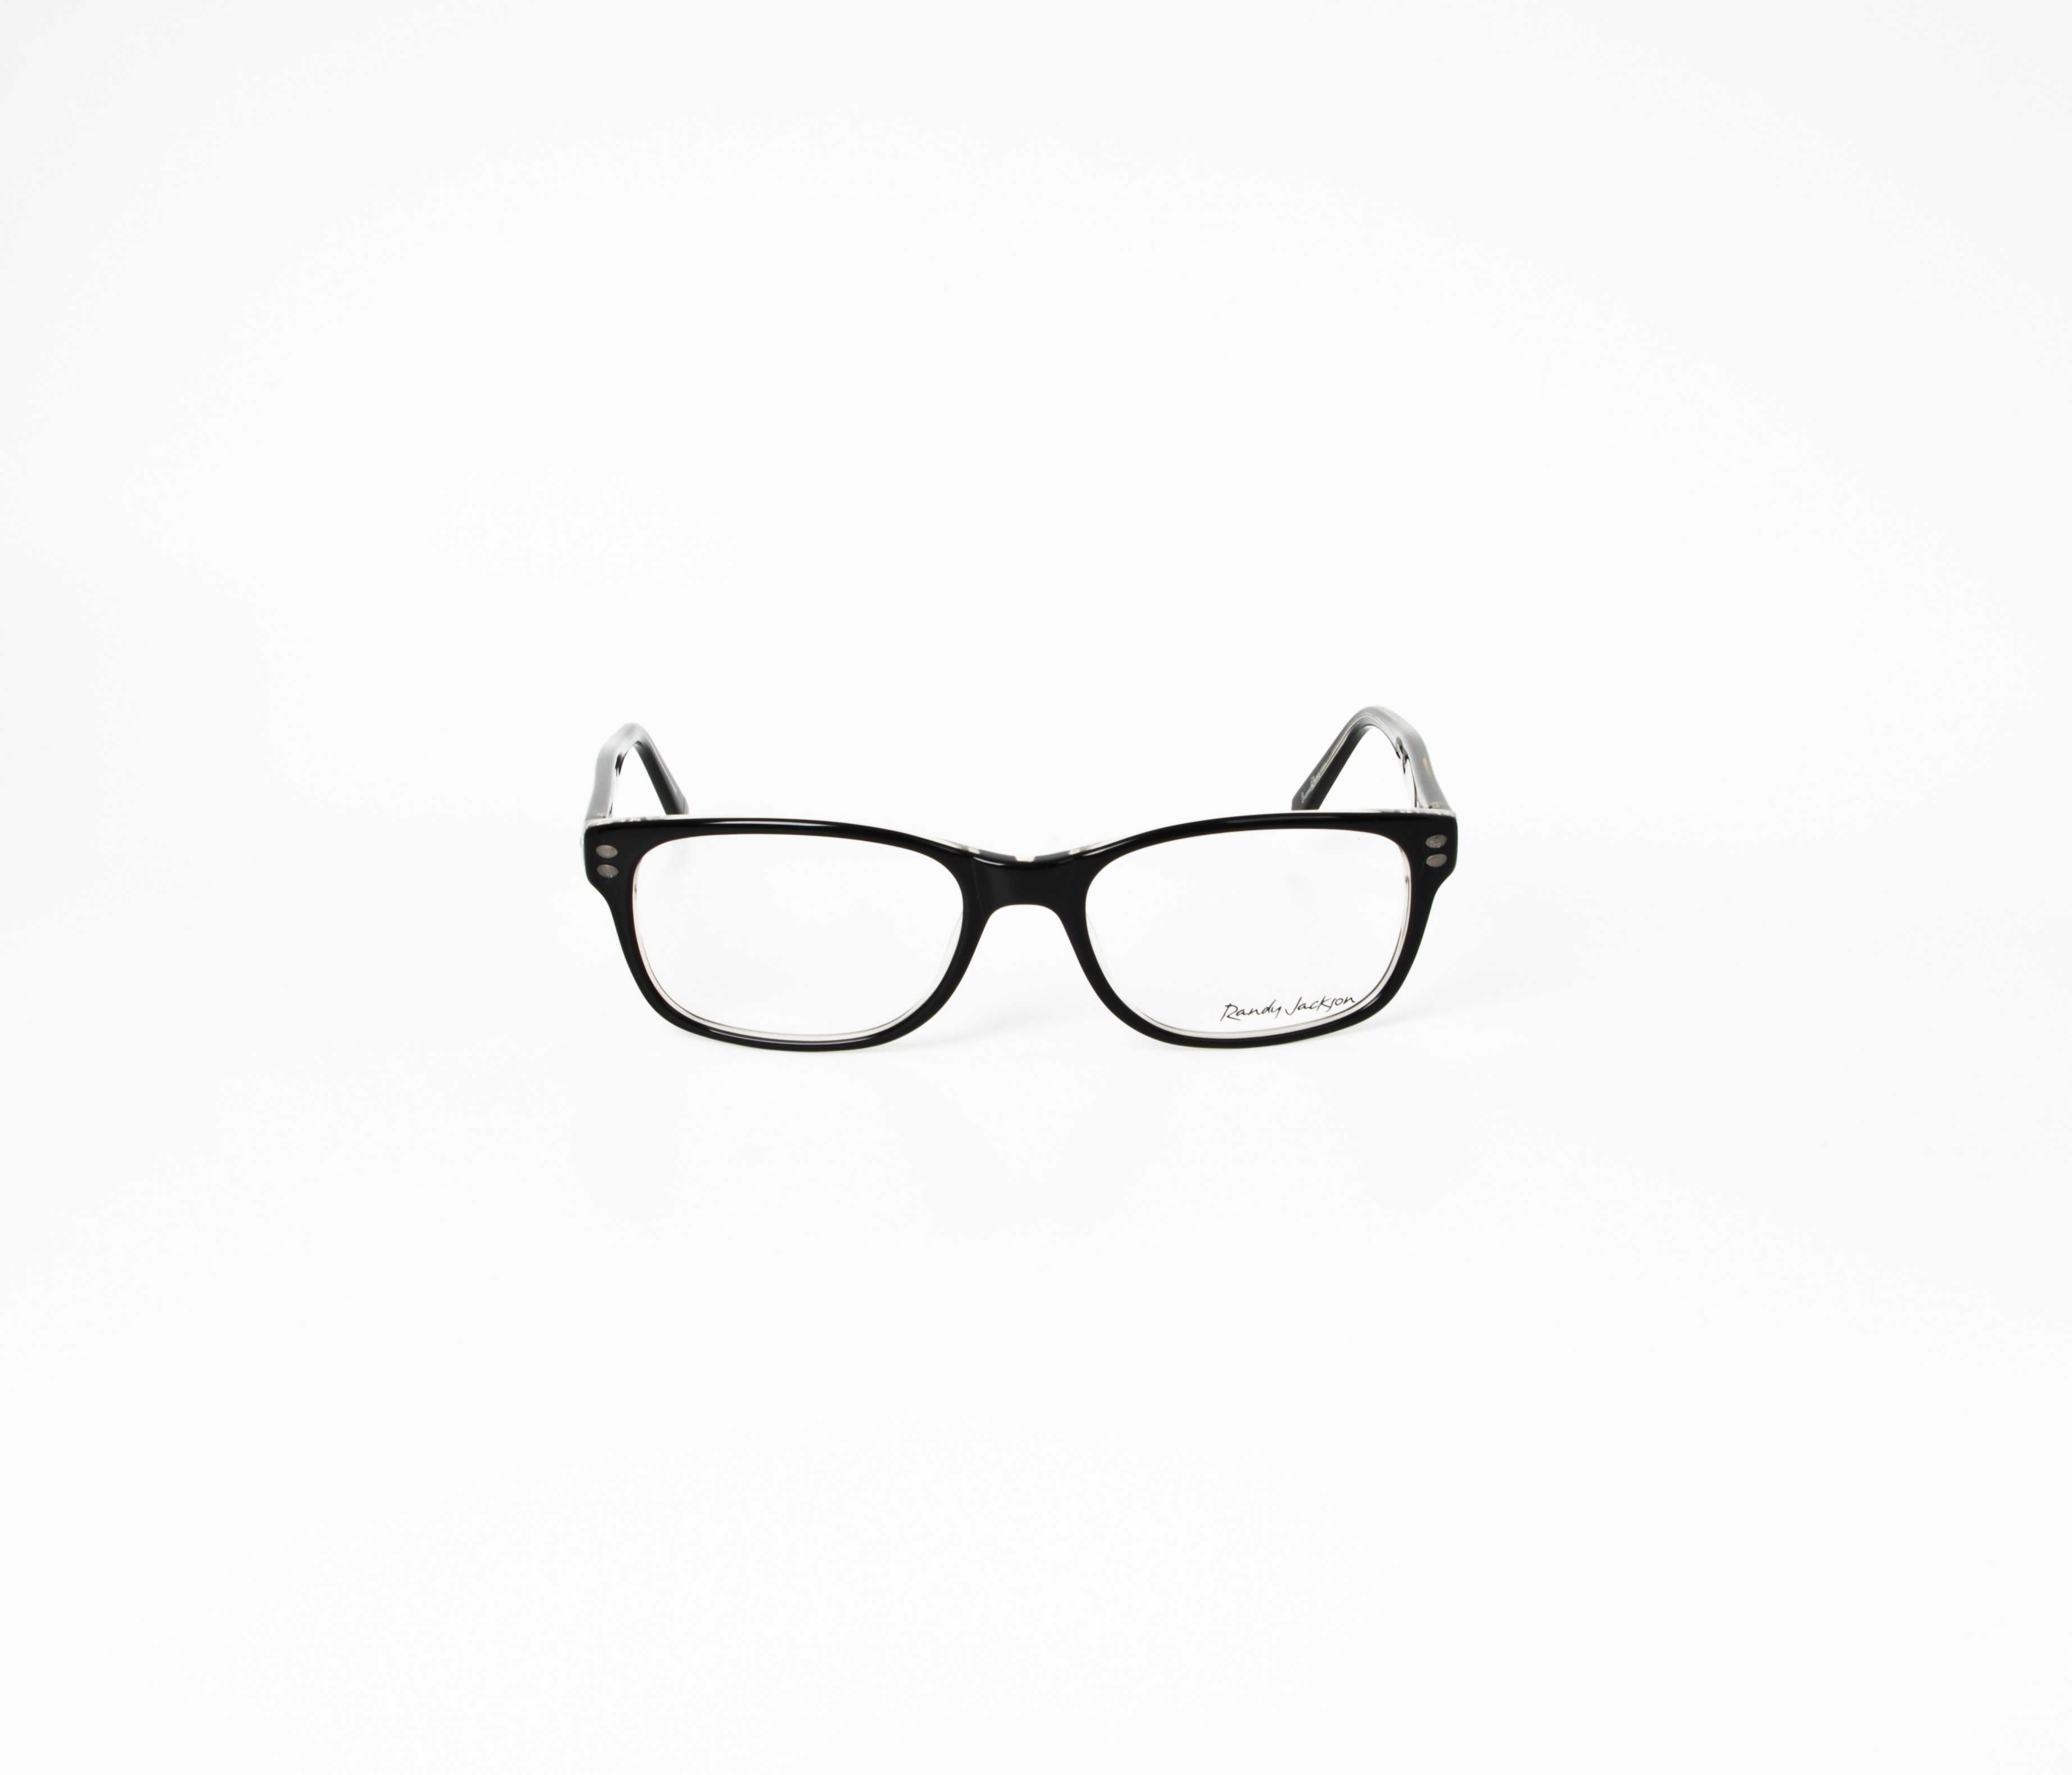 Randy Jackson Оригинал оправа для очков новая окуляри